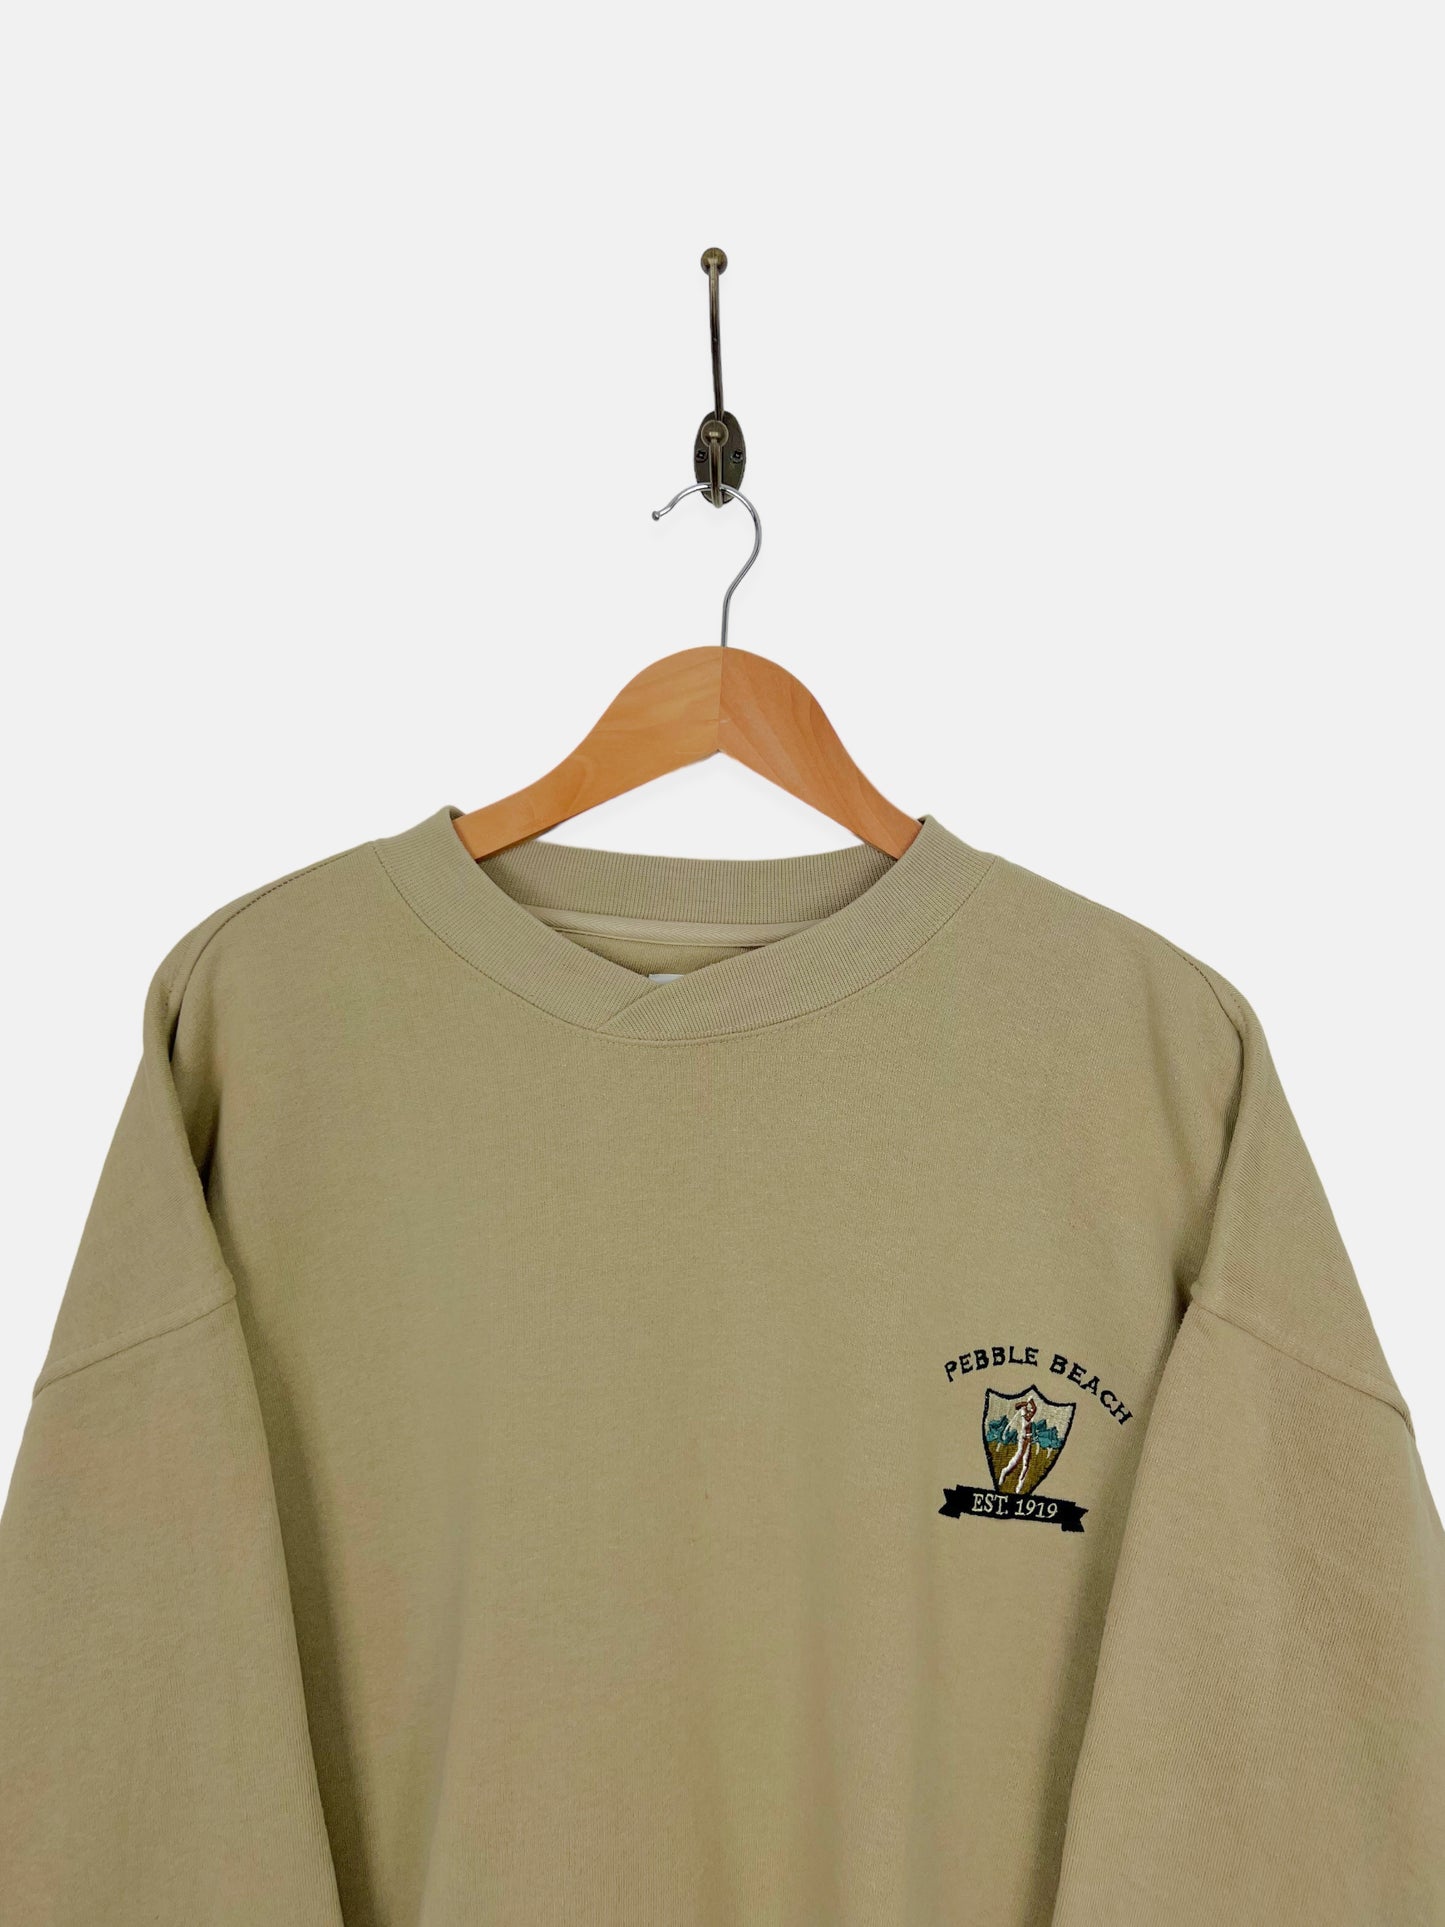 90's Pebble Beach Embroidered Vintage Sweatshirt Size L-XL